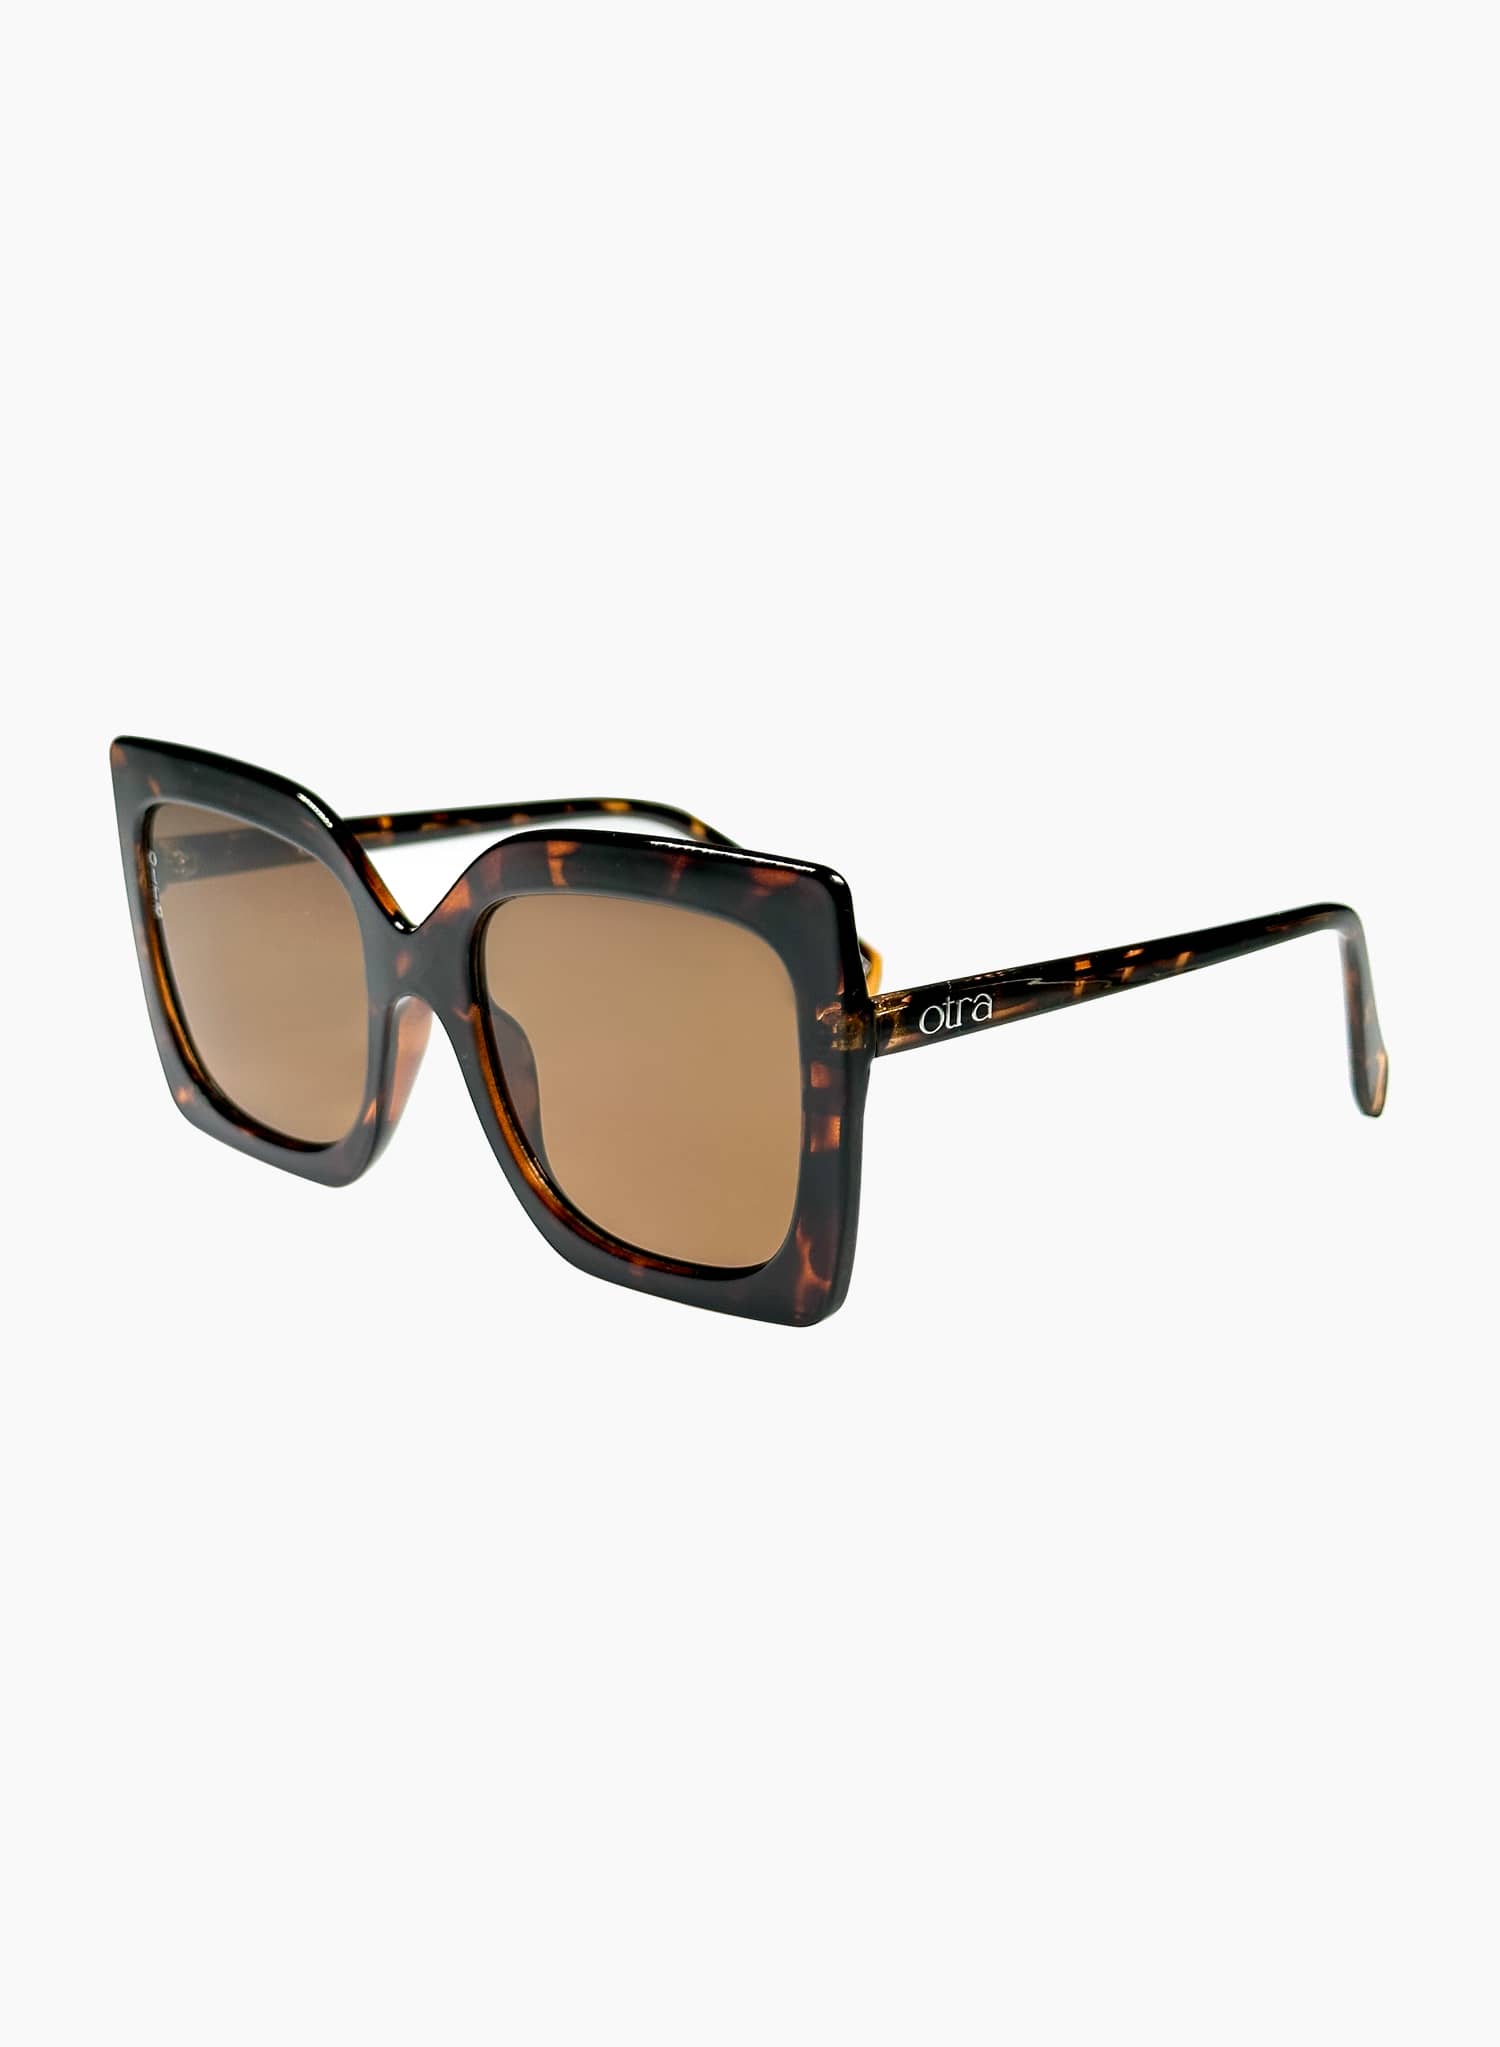 Side view of Oversized cat eye Dynasty sunglasses in brown tortoiseshell